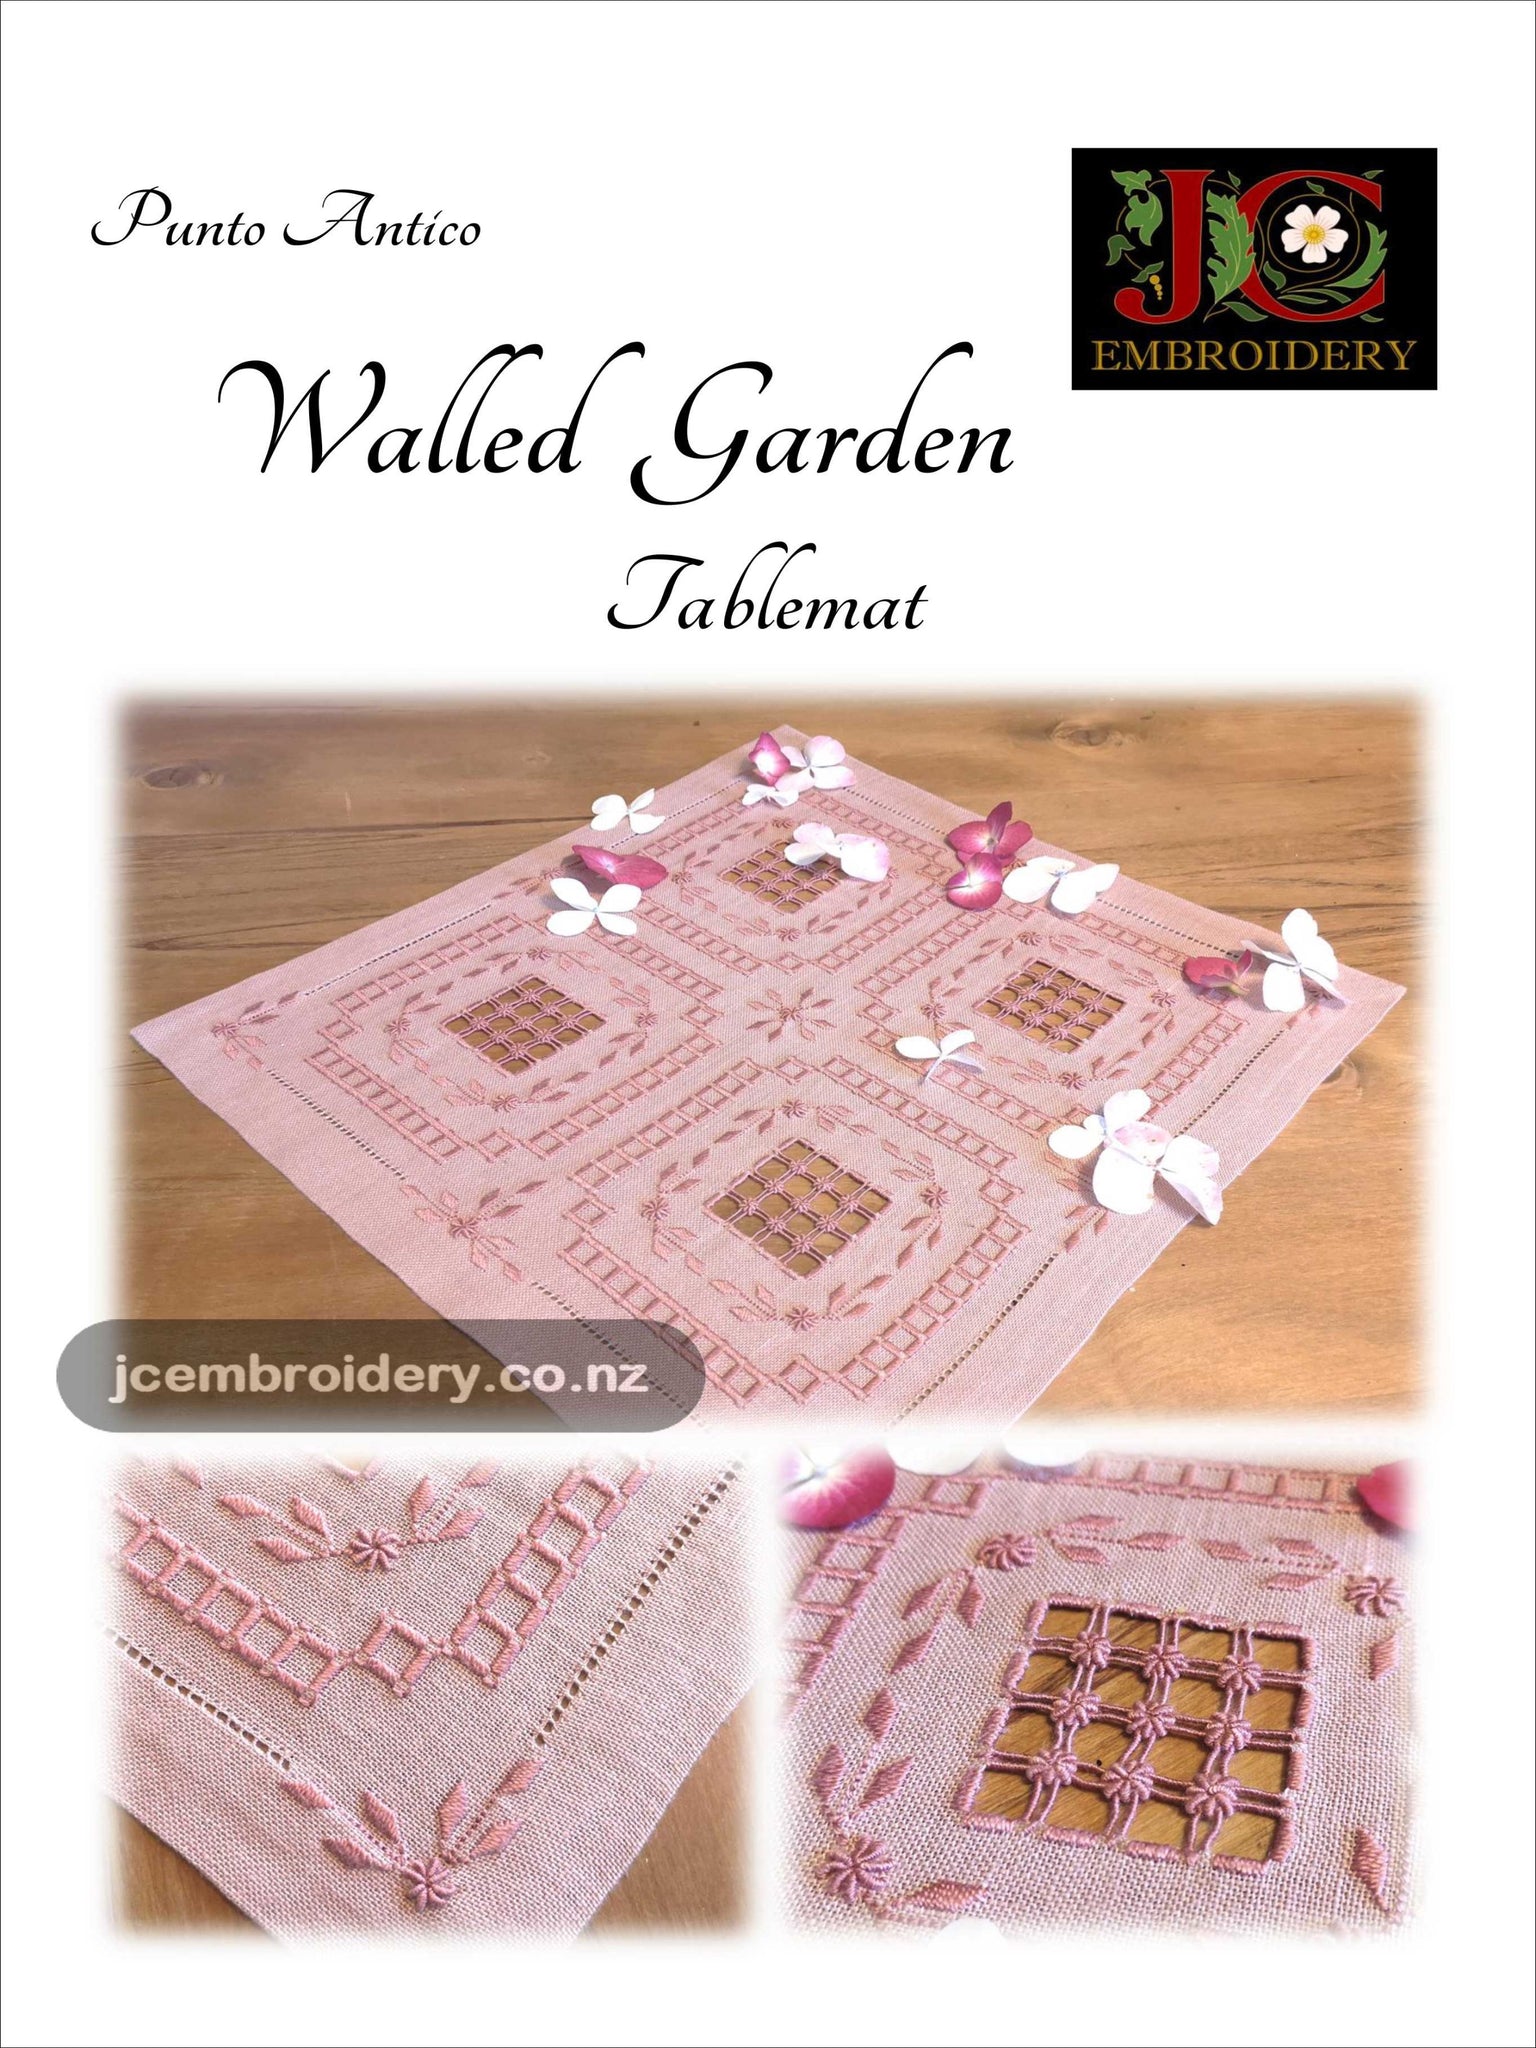 Punto Antico - Walled Garden Tablemat